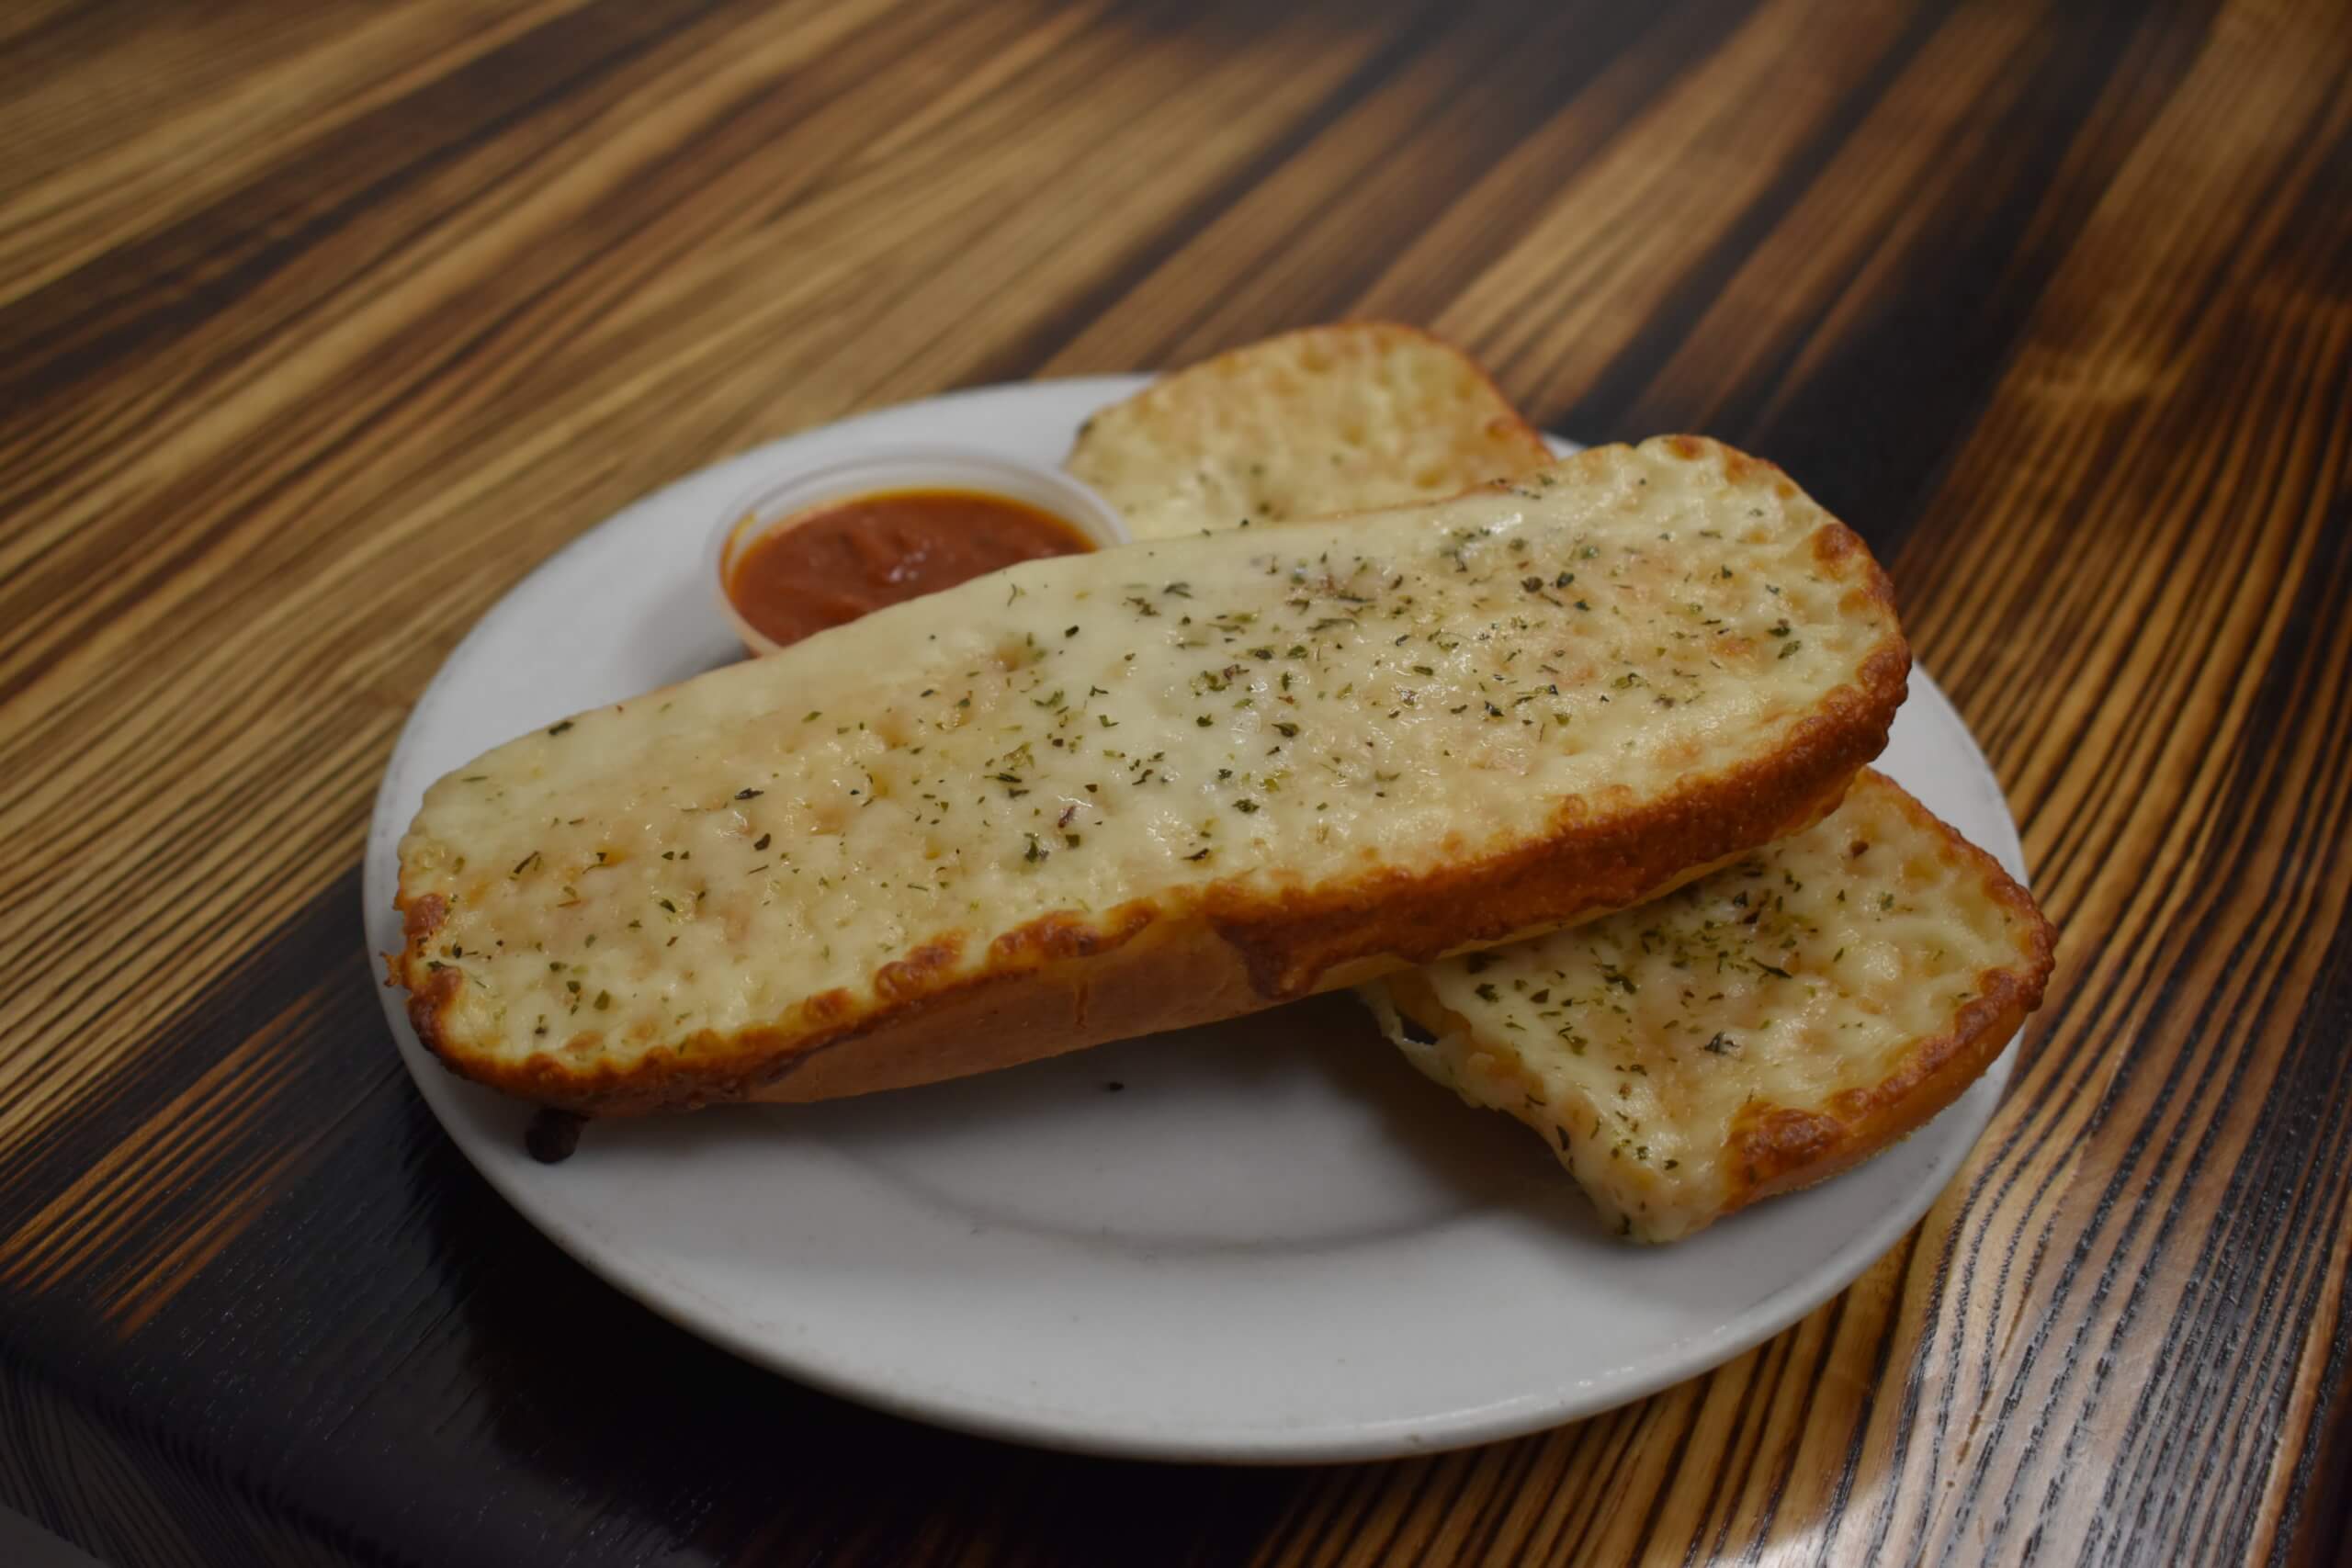 Garlic bread appetizer from Pequod's Pizza.